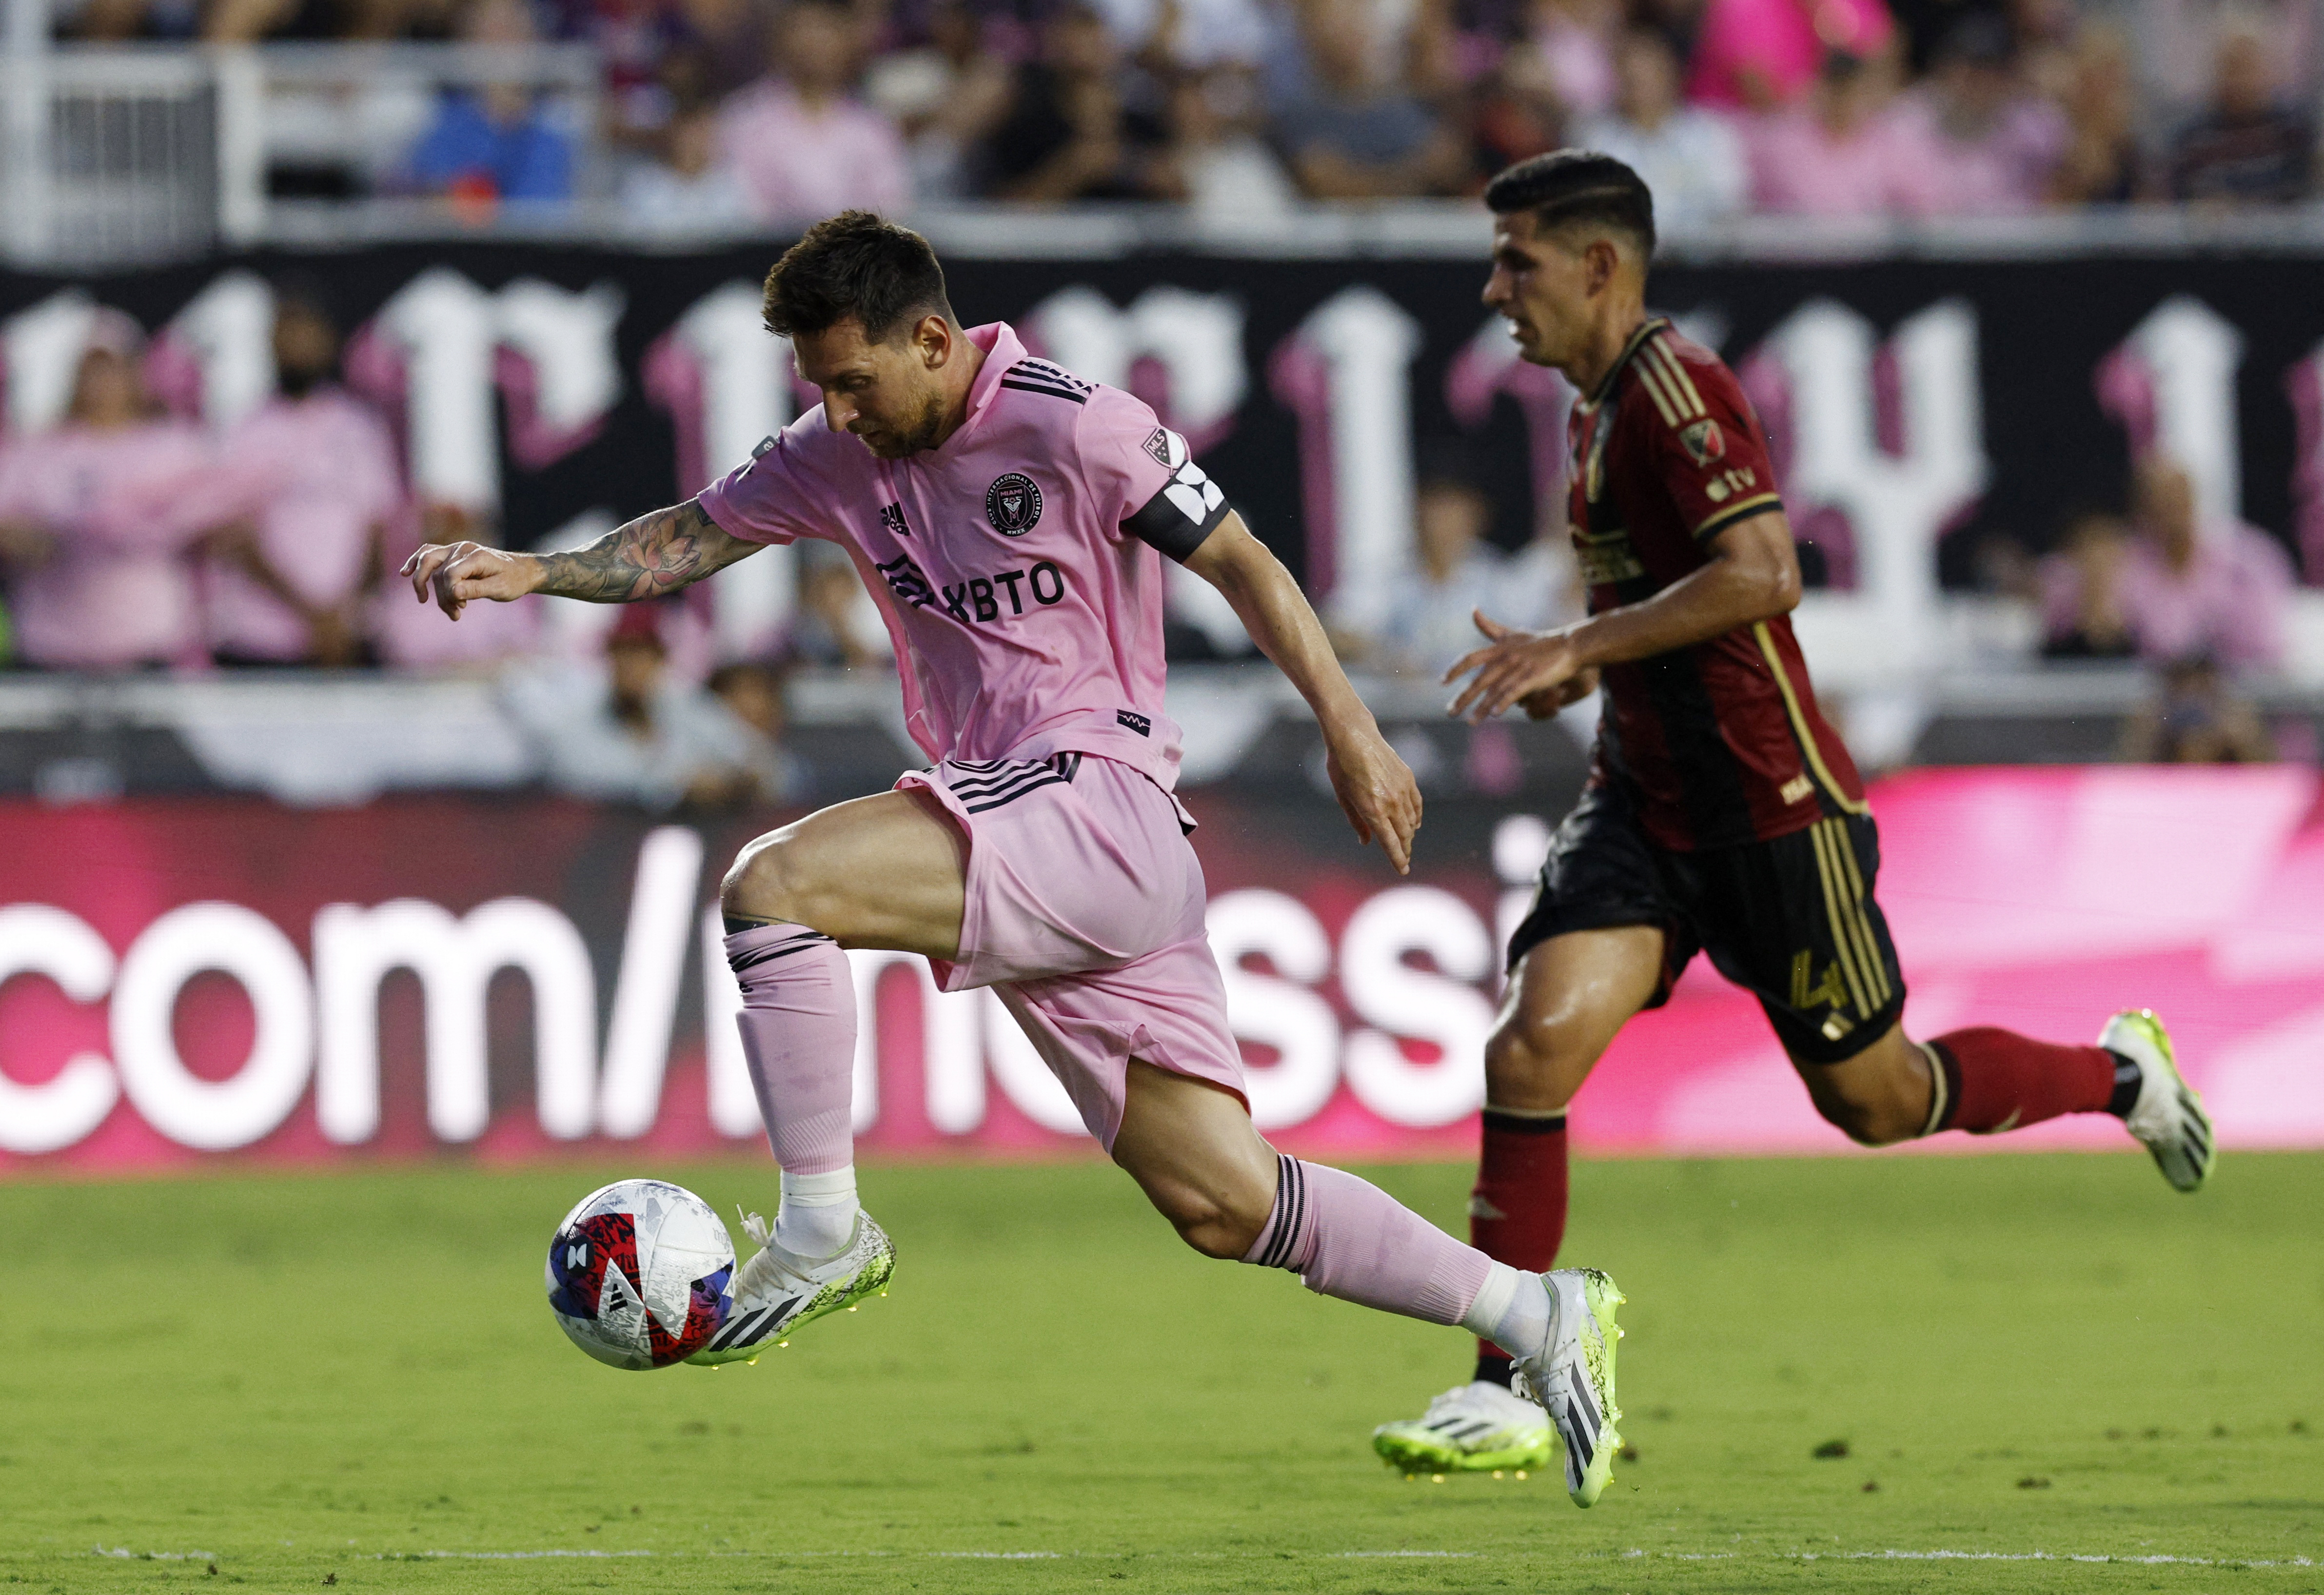 Lionel Messi two goals, one assist for Inter Miami in 4-0 win vs